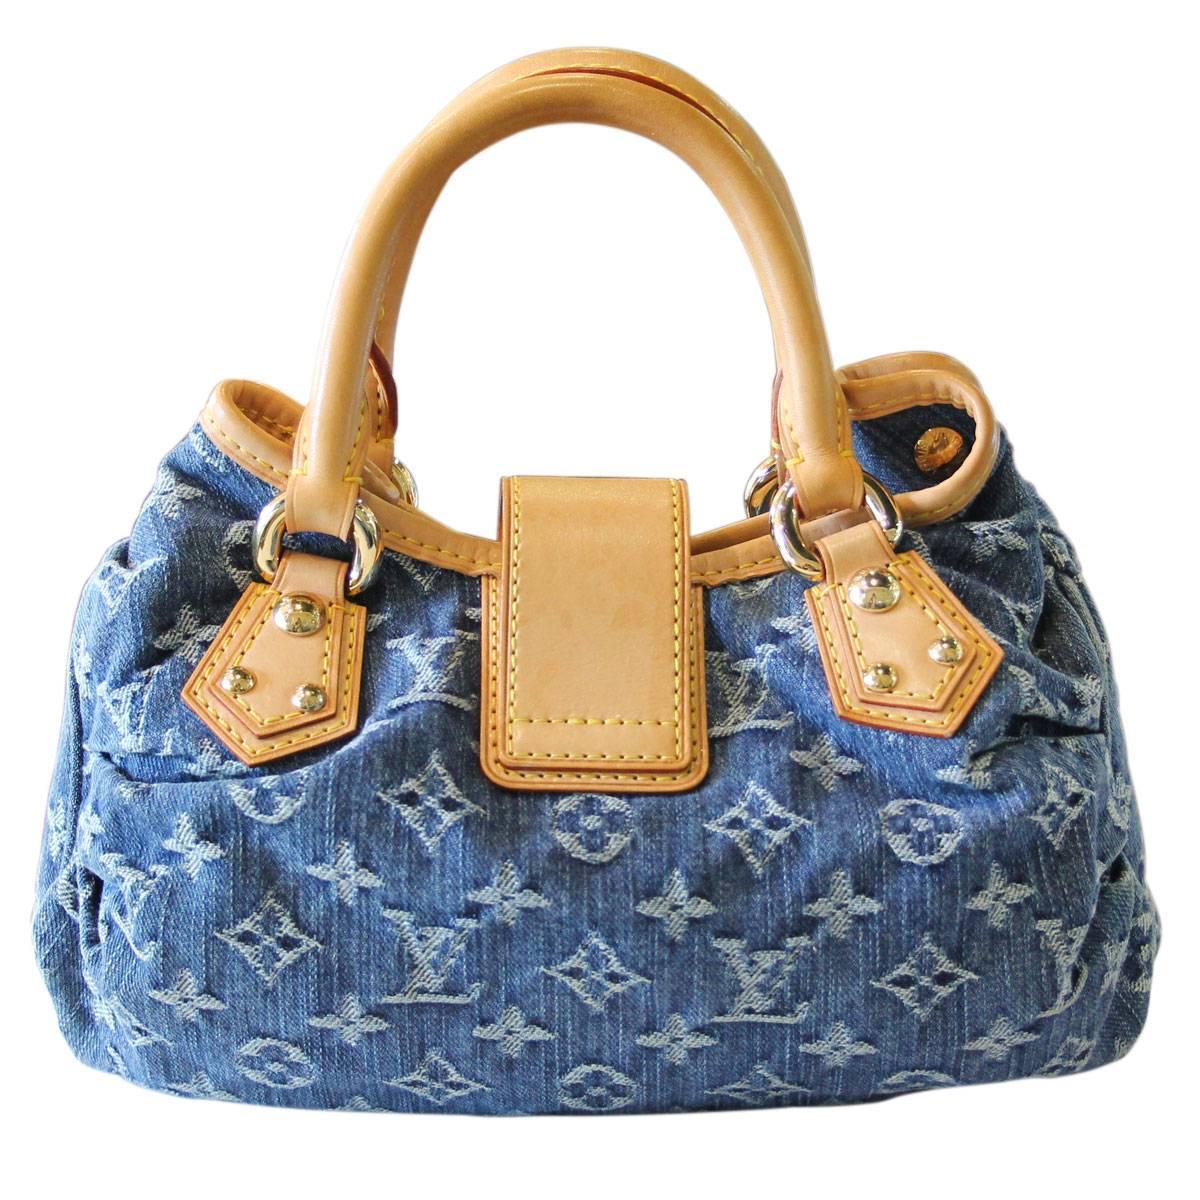 Replica Denim Louis Vuitton Handbags | Confederated Tribes of the Umatilla Indian Reservation